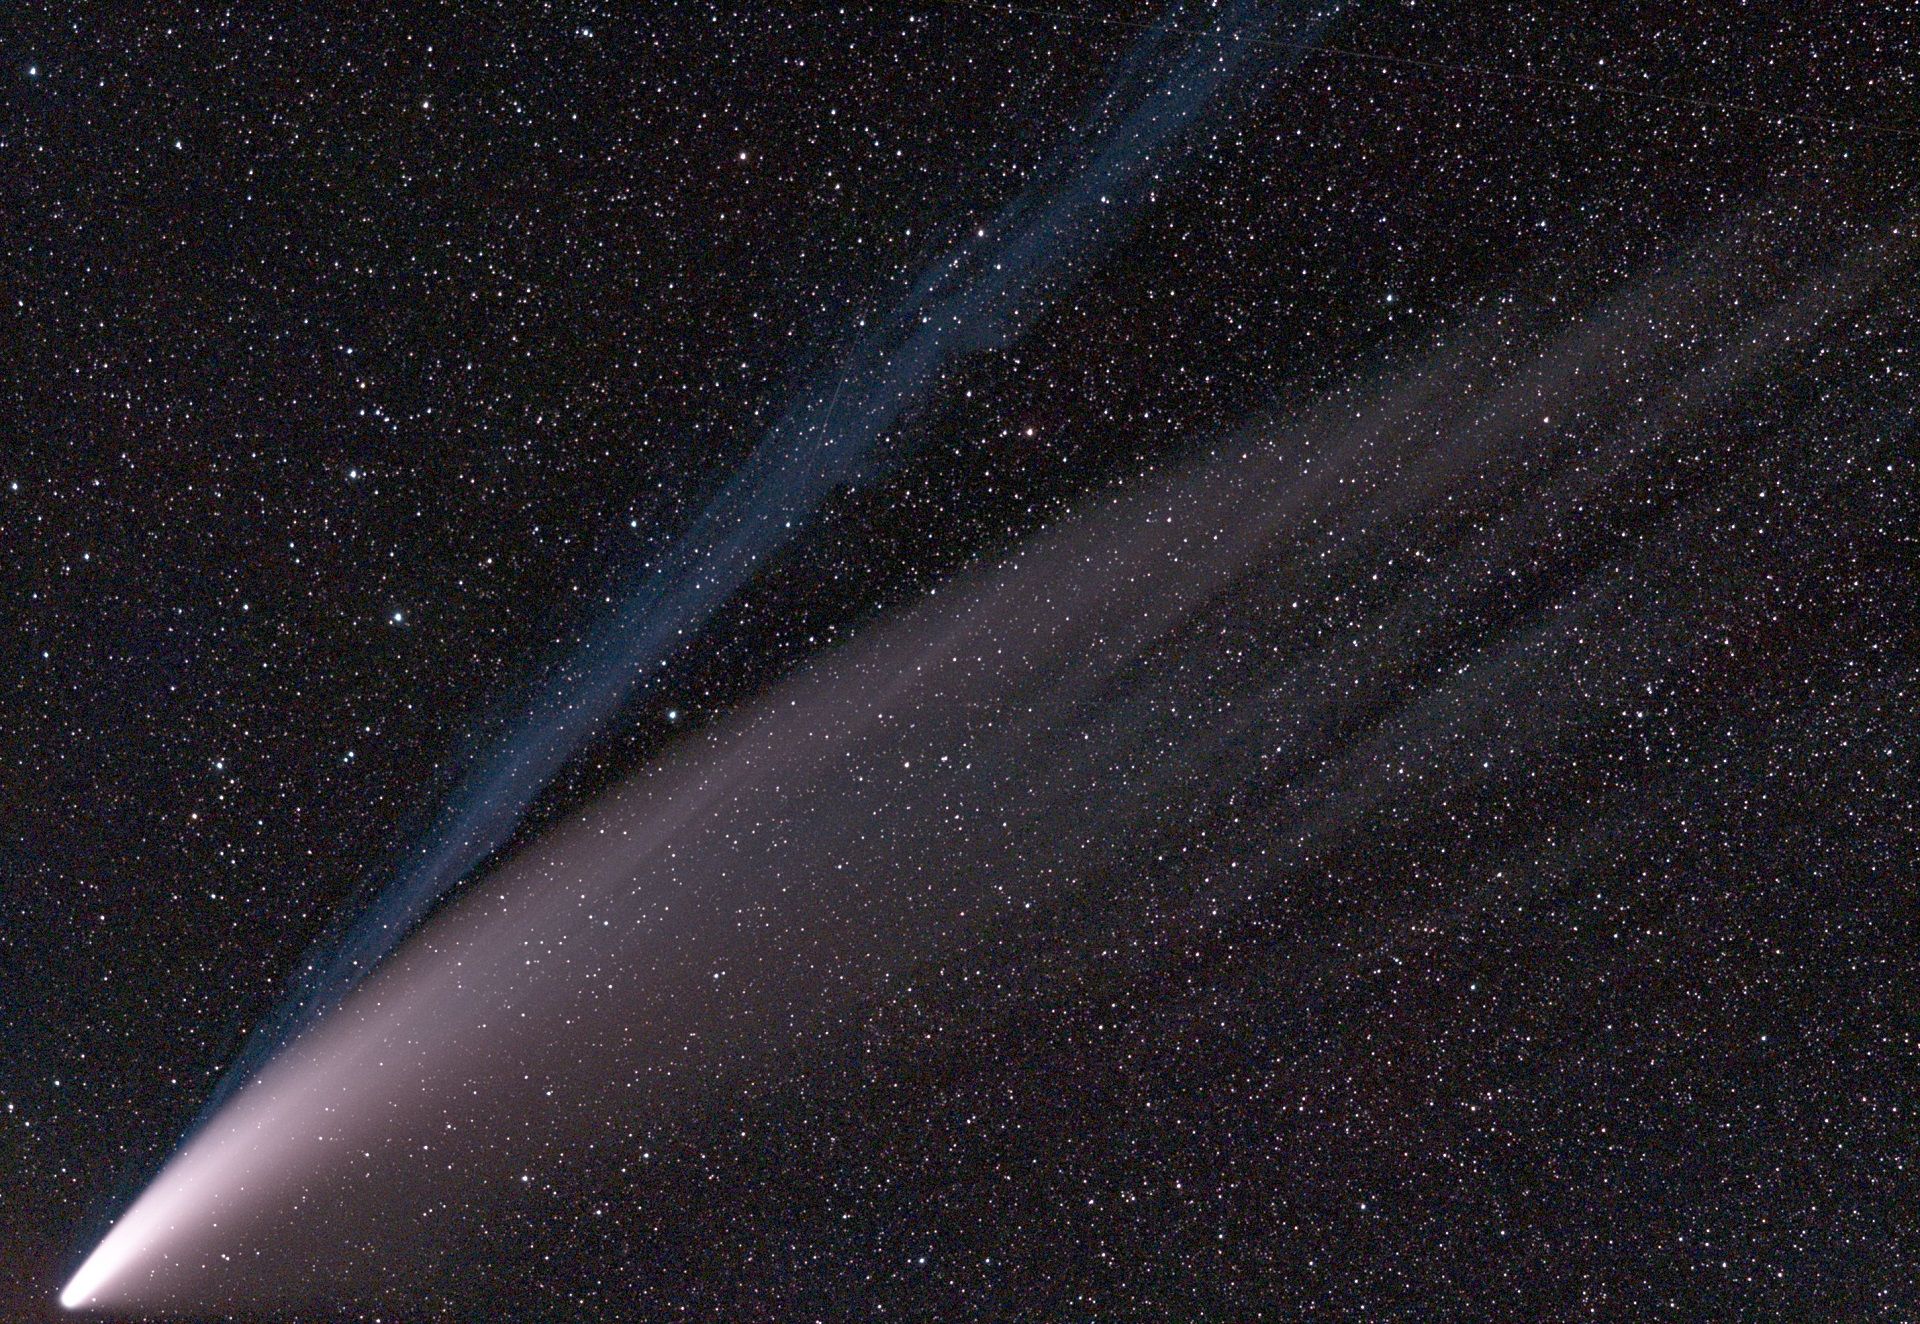 Comet_2020_F3_(NEOWISE)_on_Jul_14_2020_aligned_to_stars.jpg